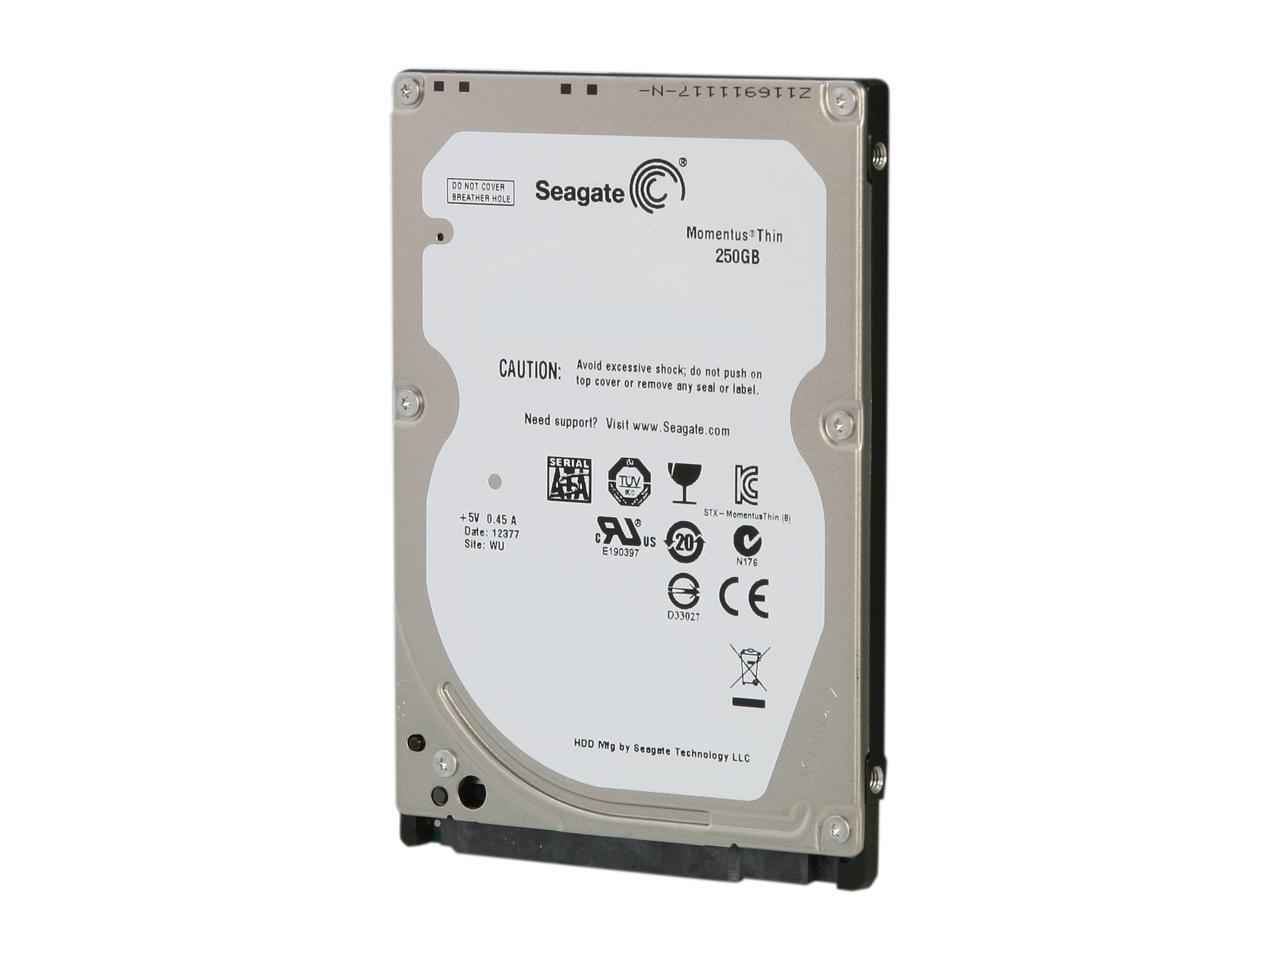 Seagate Momentus Thin St250Lt003 250Gb 5400 Rpm 16Mb Cache Sata 3.0Gb/S 2.5" Internal Notebook Hard Drive